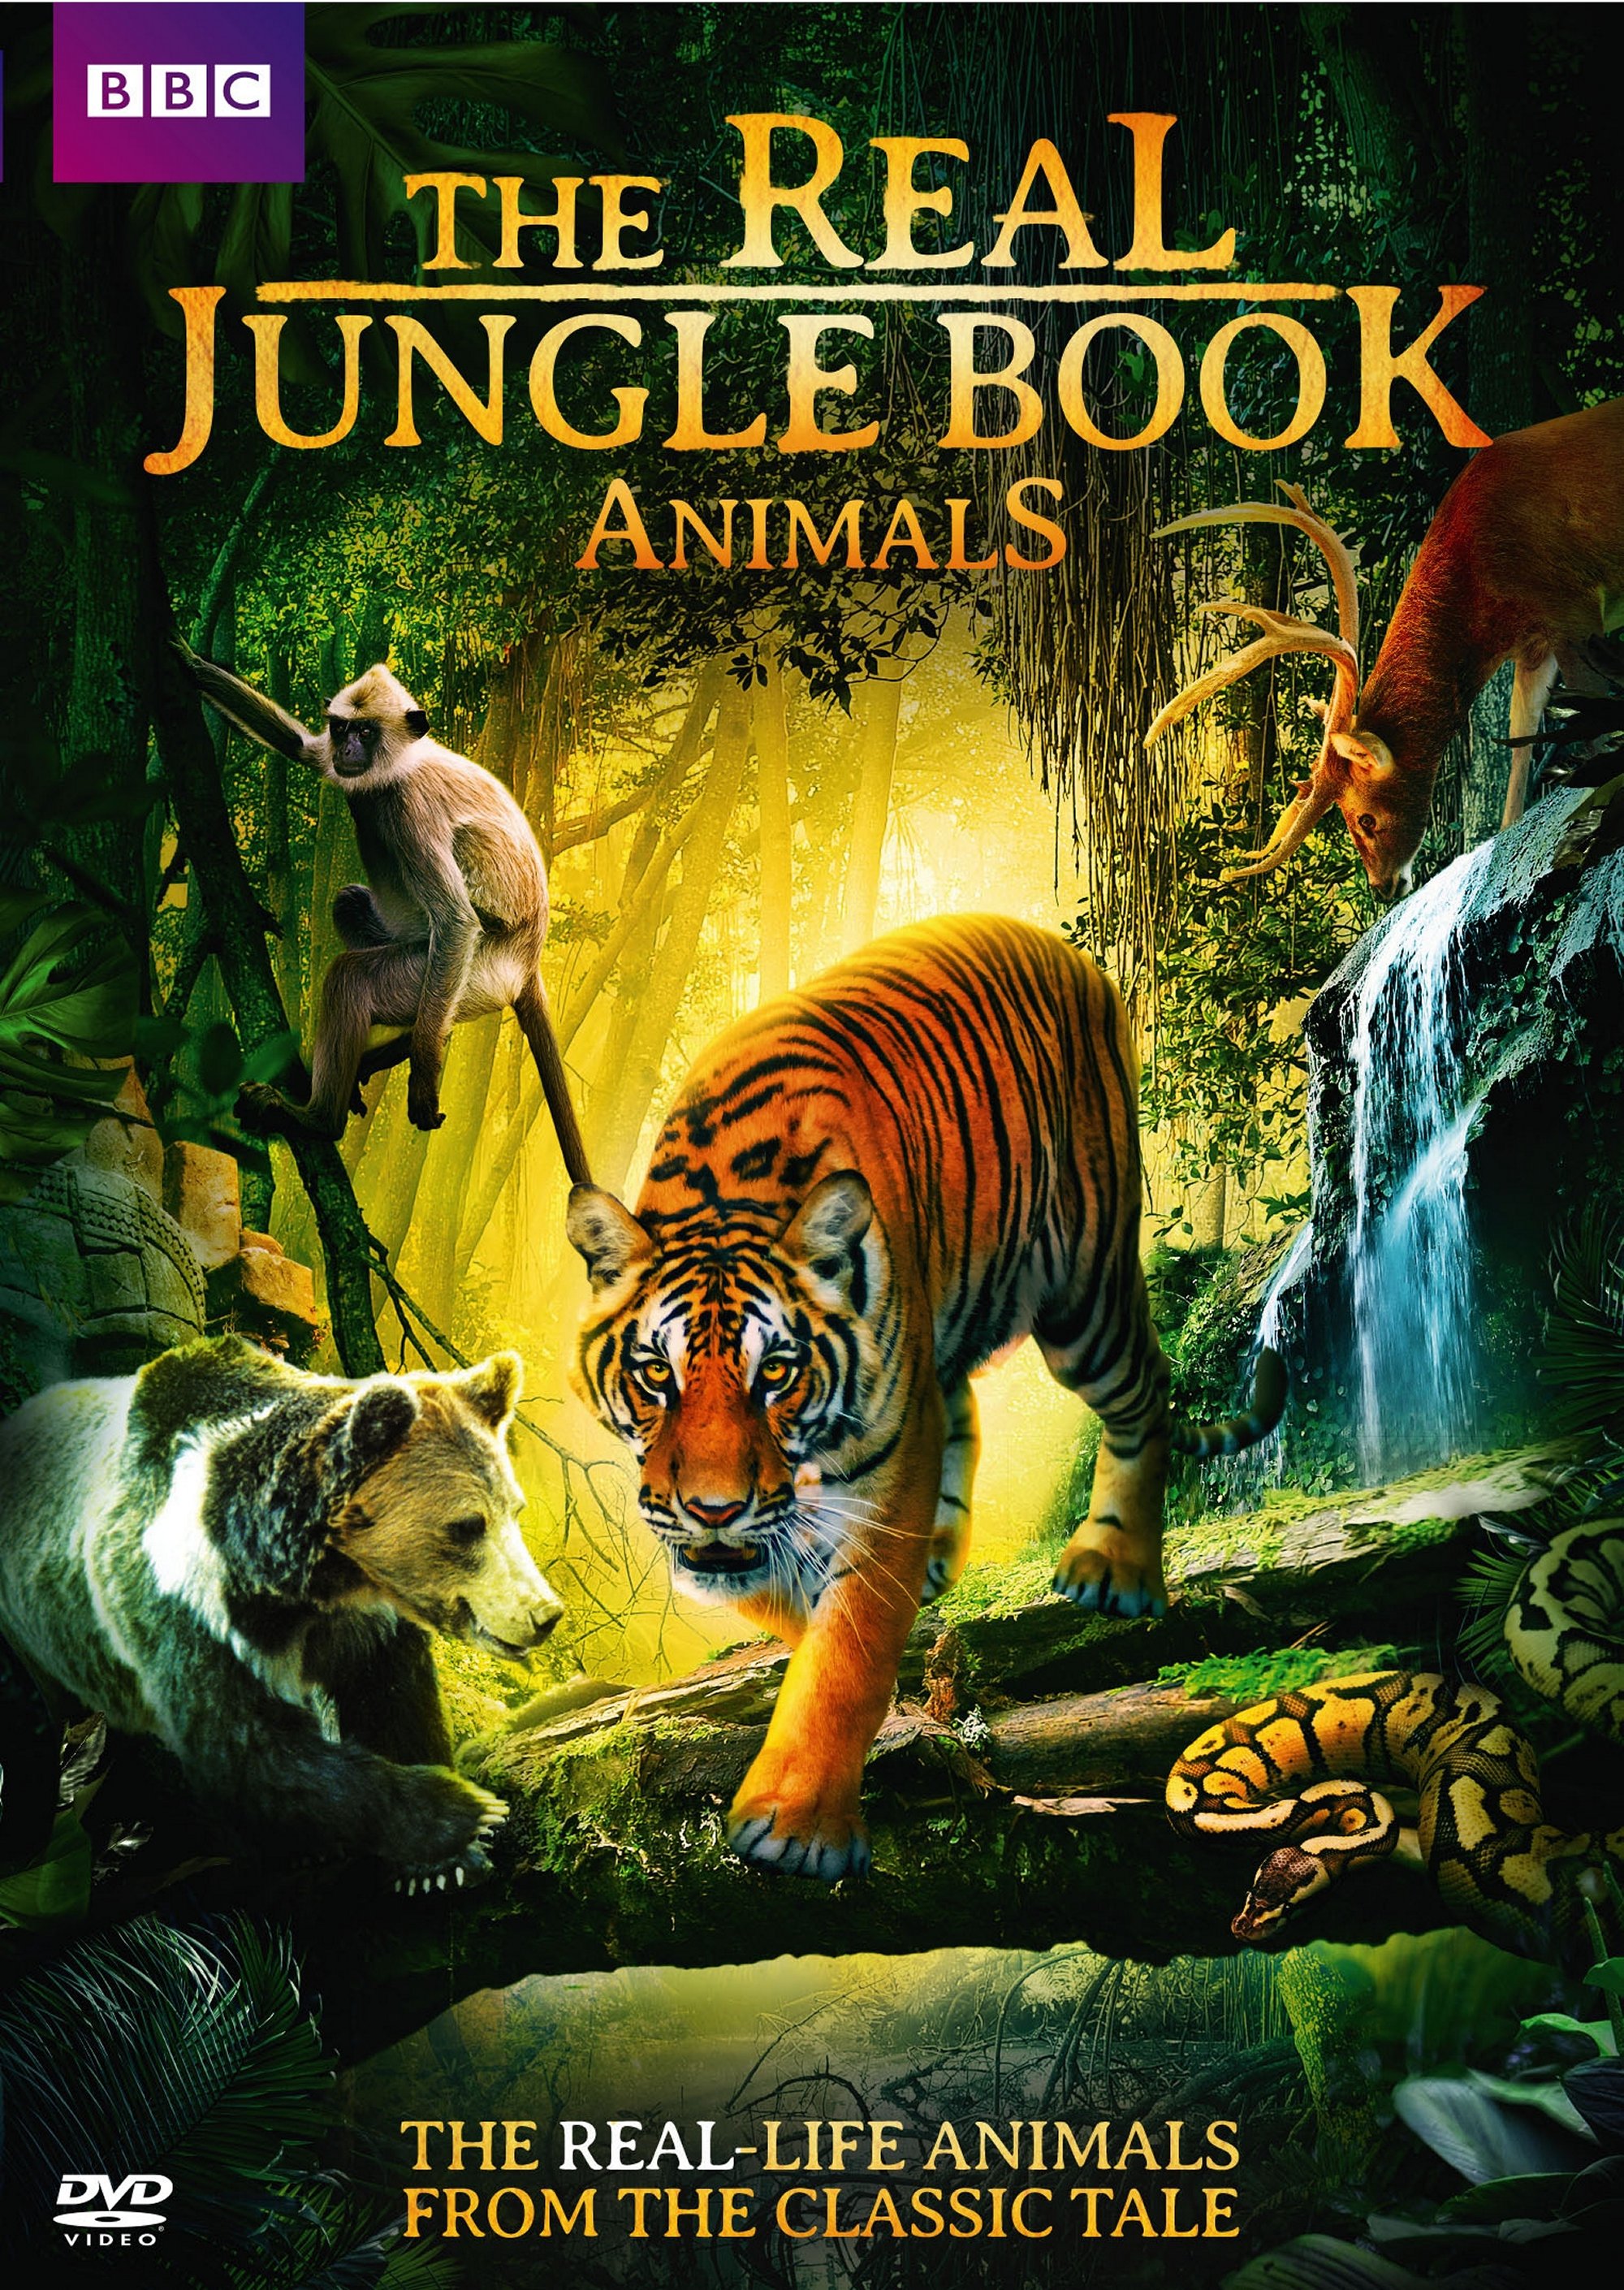 The Real Jungle Book Animals (2016) - | Releases | AllMovie